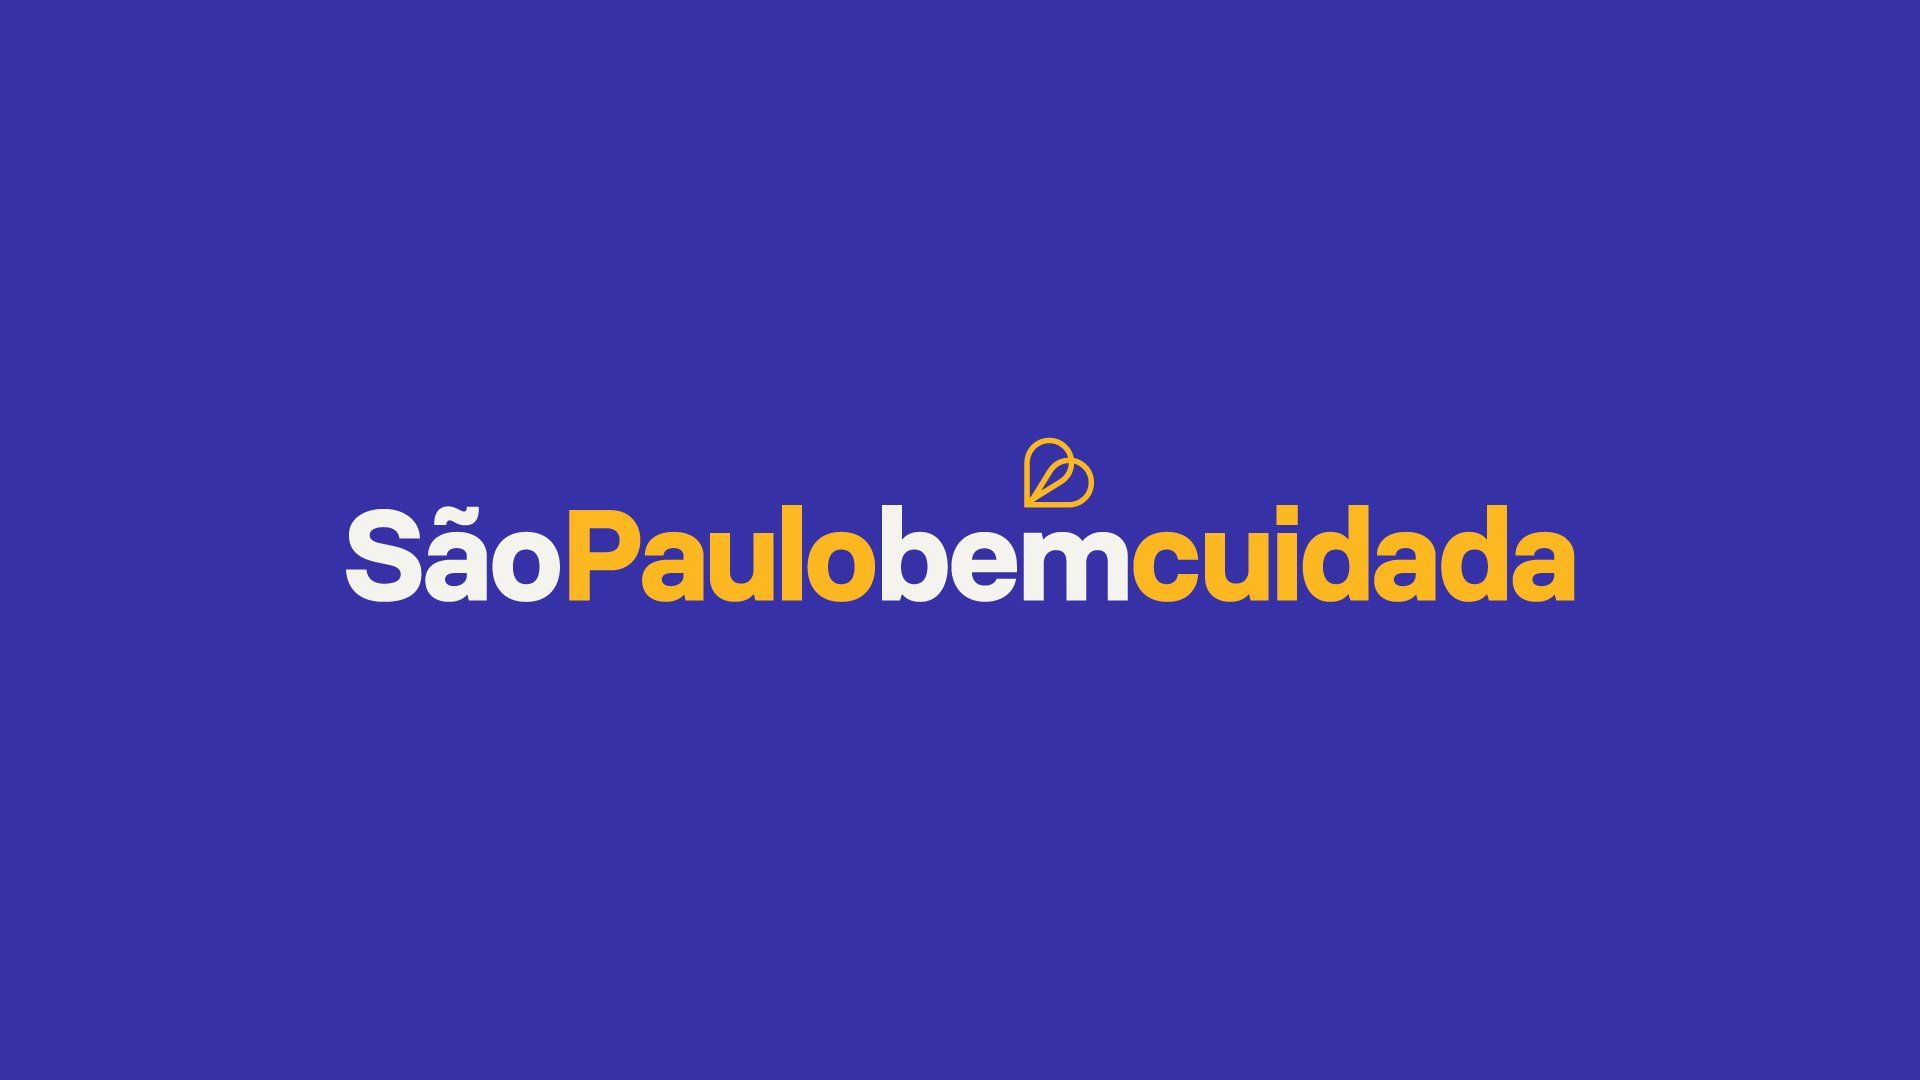 Onde estamos & onde vamos – São Paulo bem cuidada